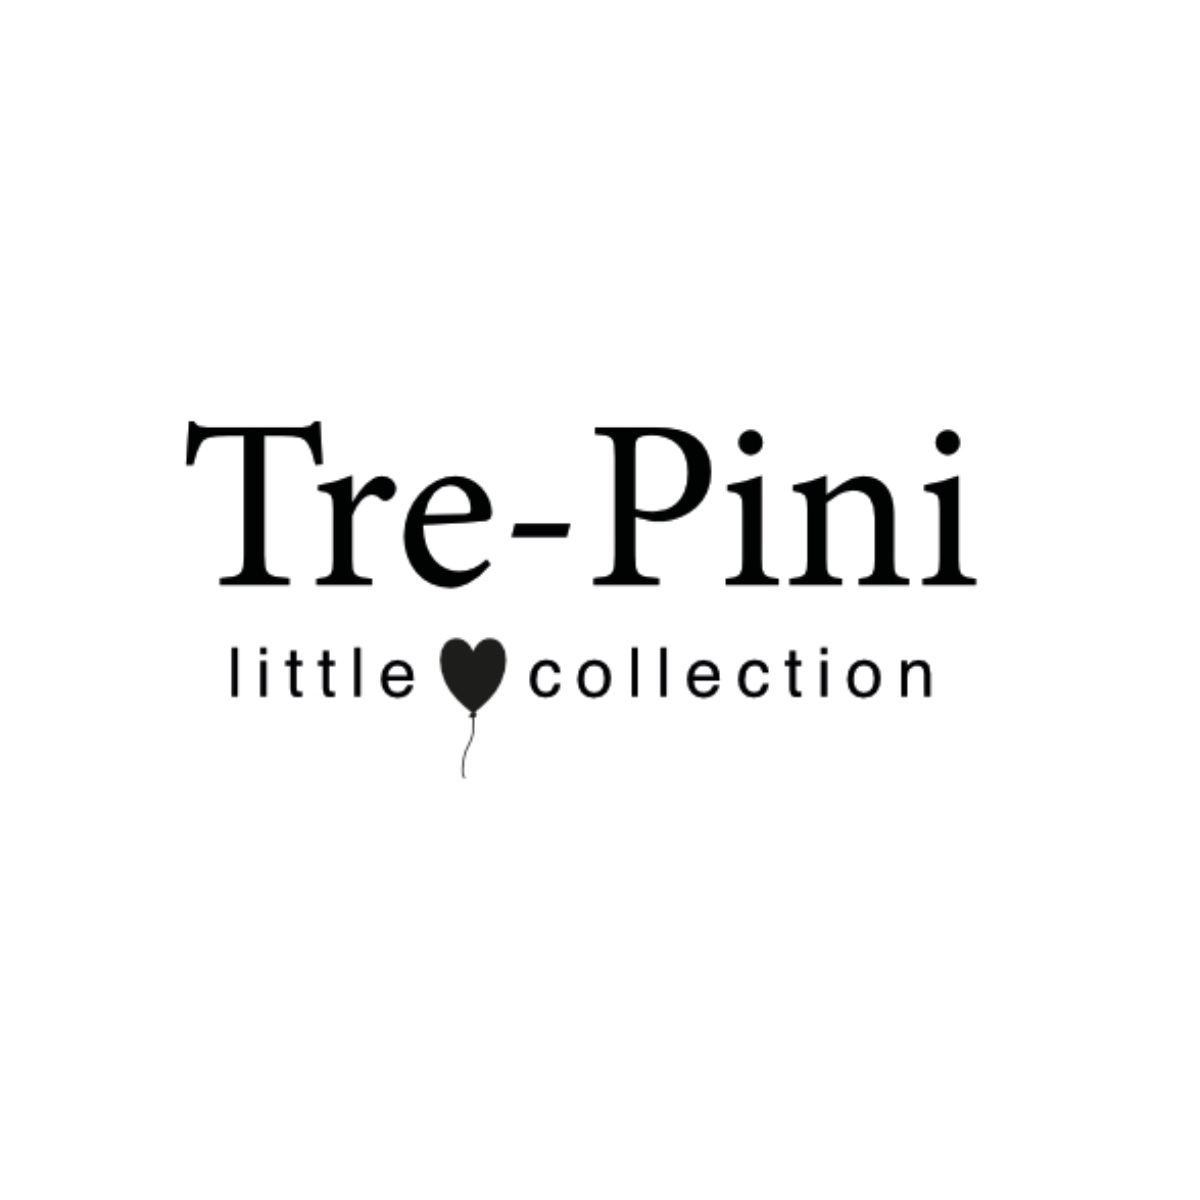 Tre-Pini little ♥ collection